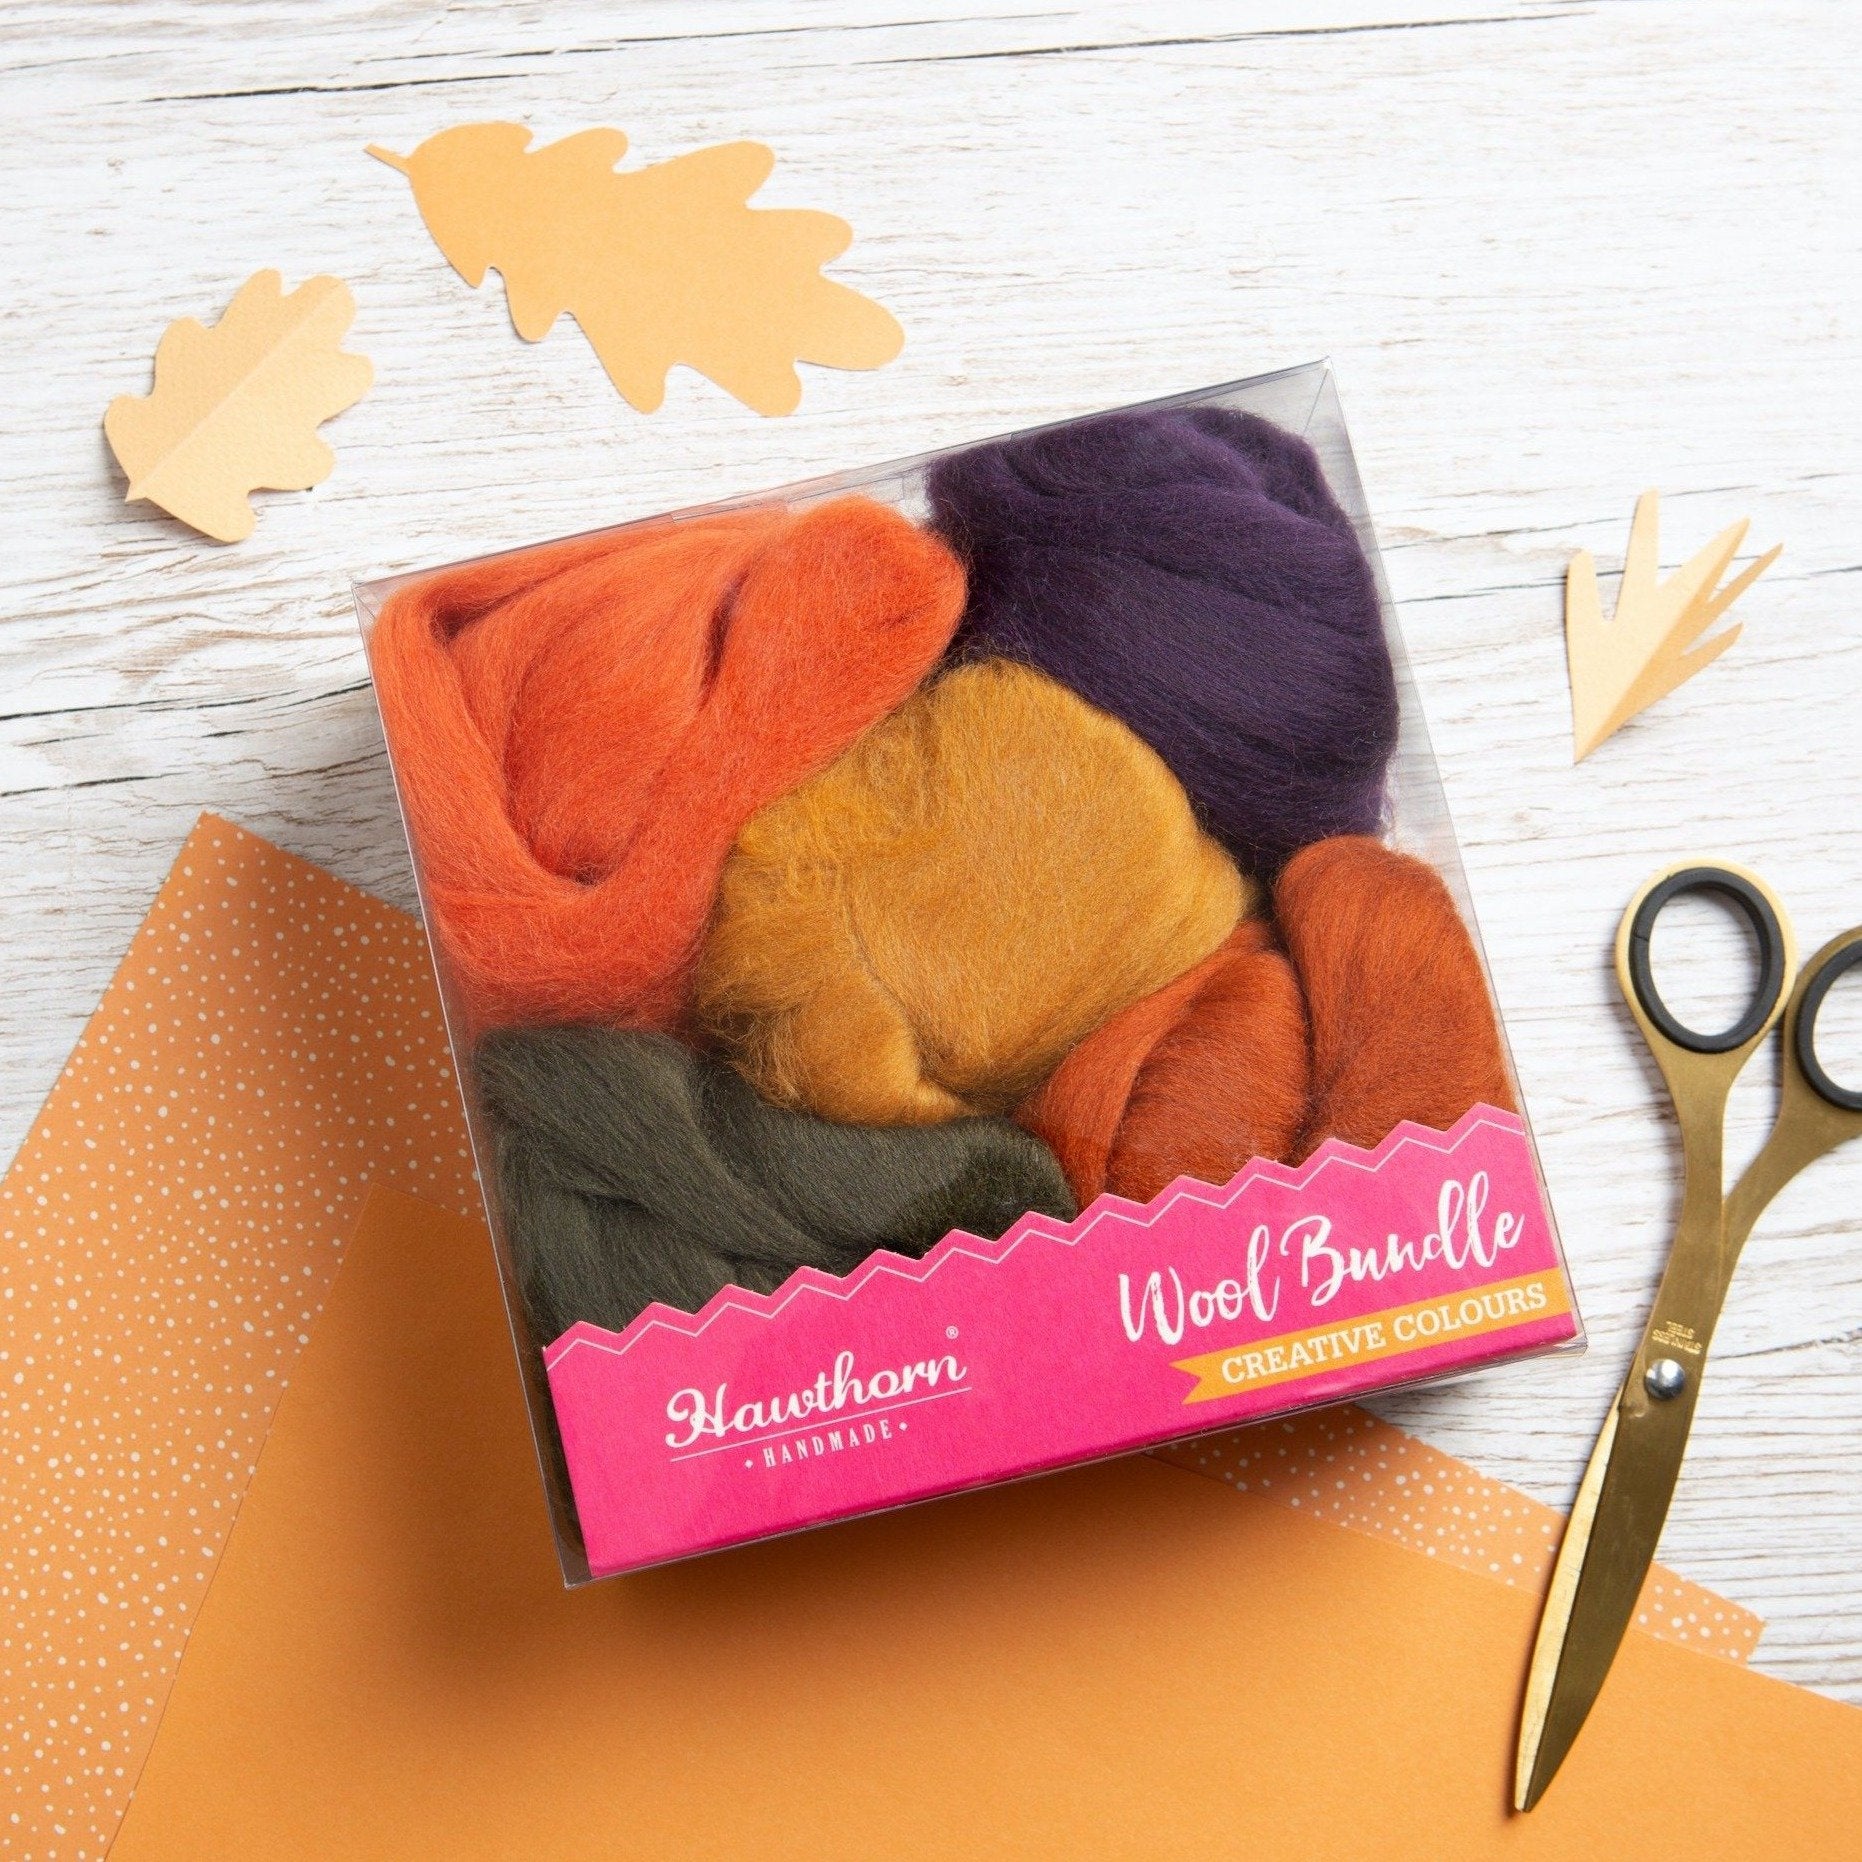 Autumn Wool Bundle box displayed on wooden background.